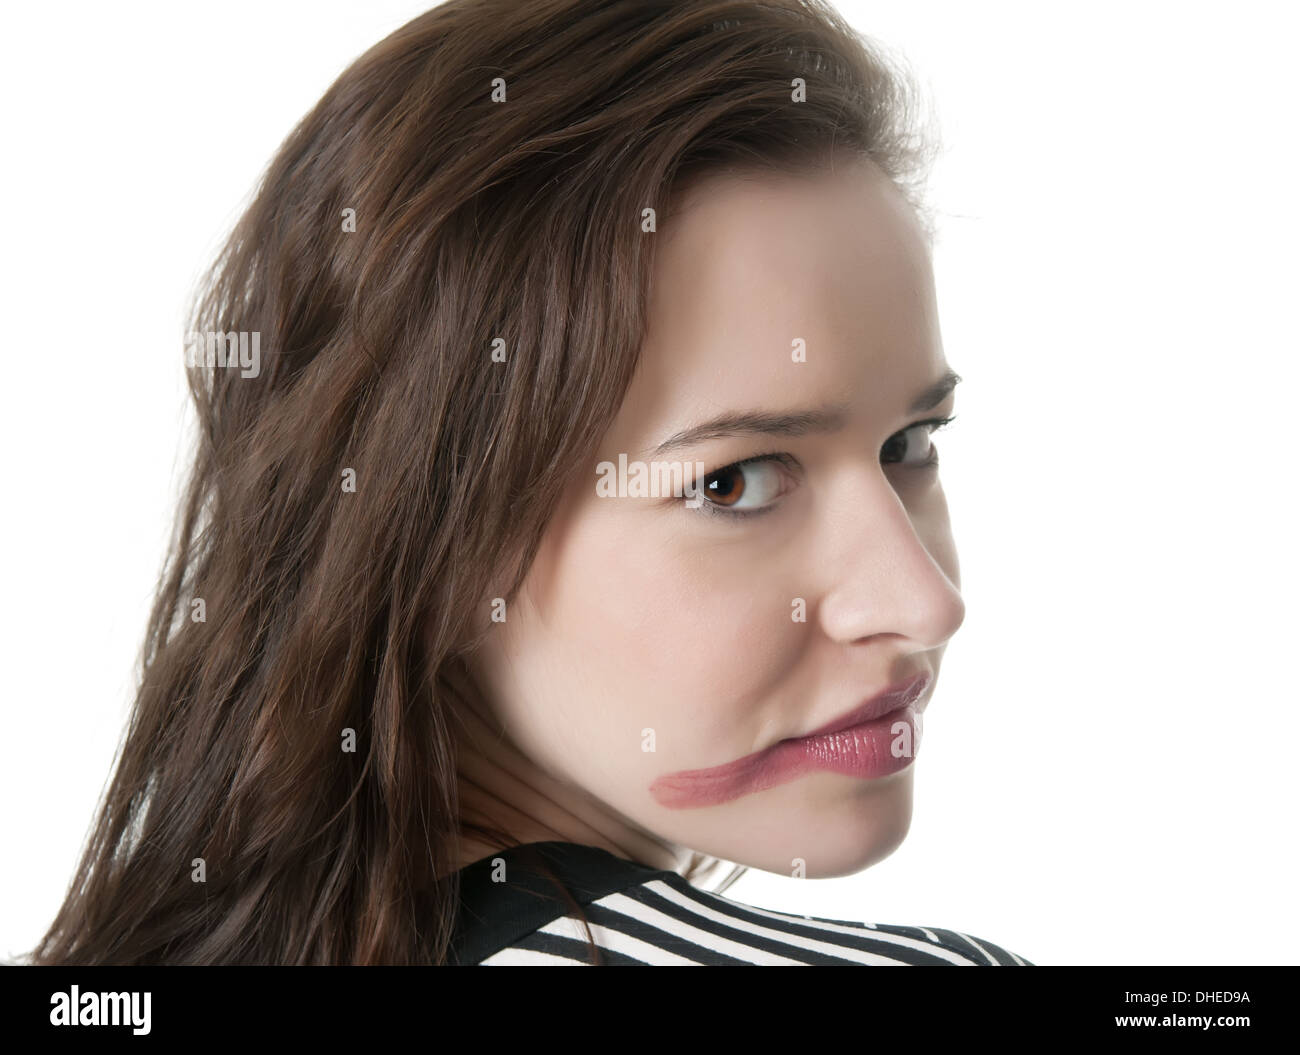 woman with crazy makeup Stock Photo - Alamy